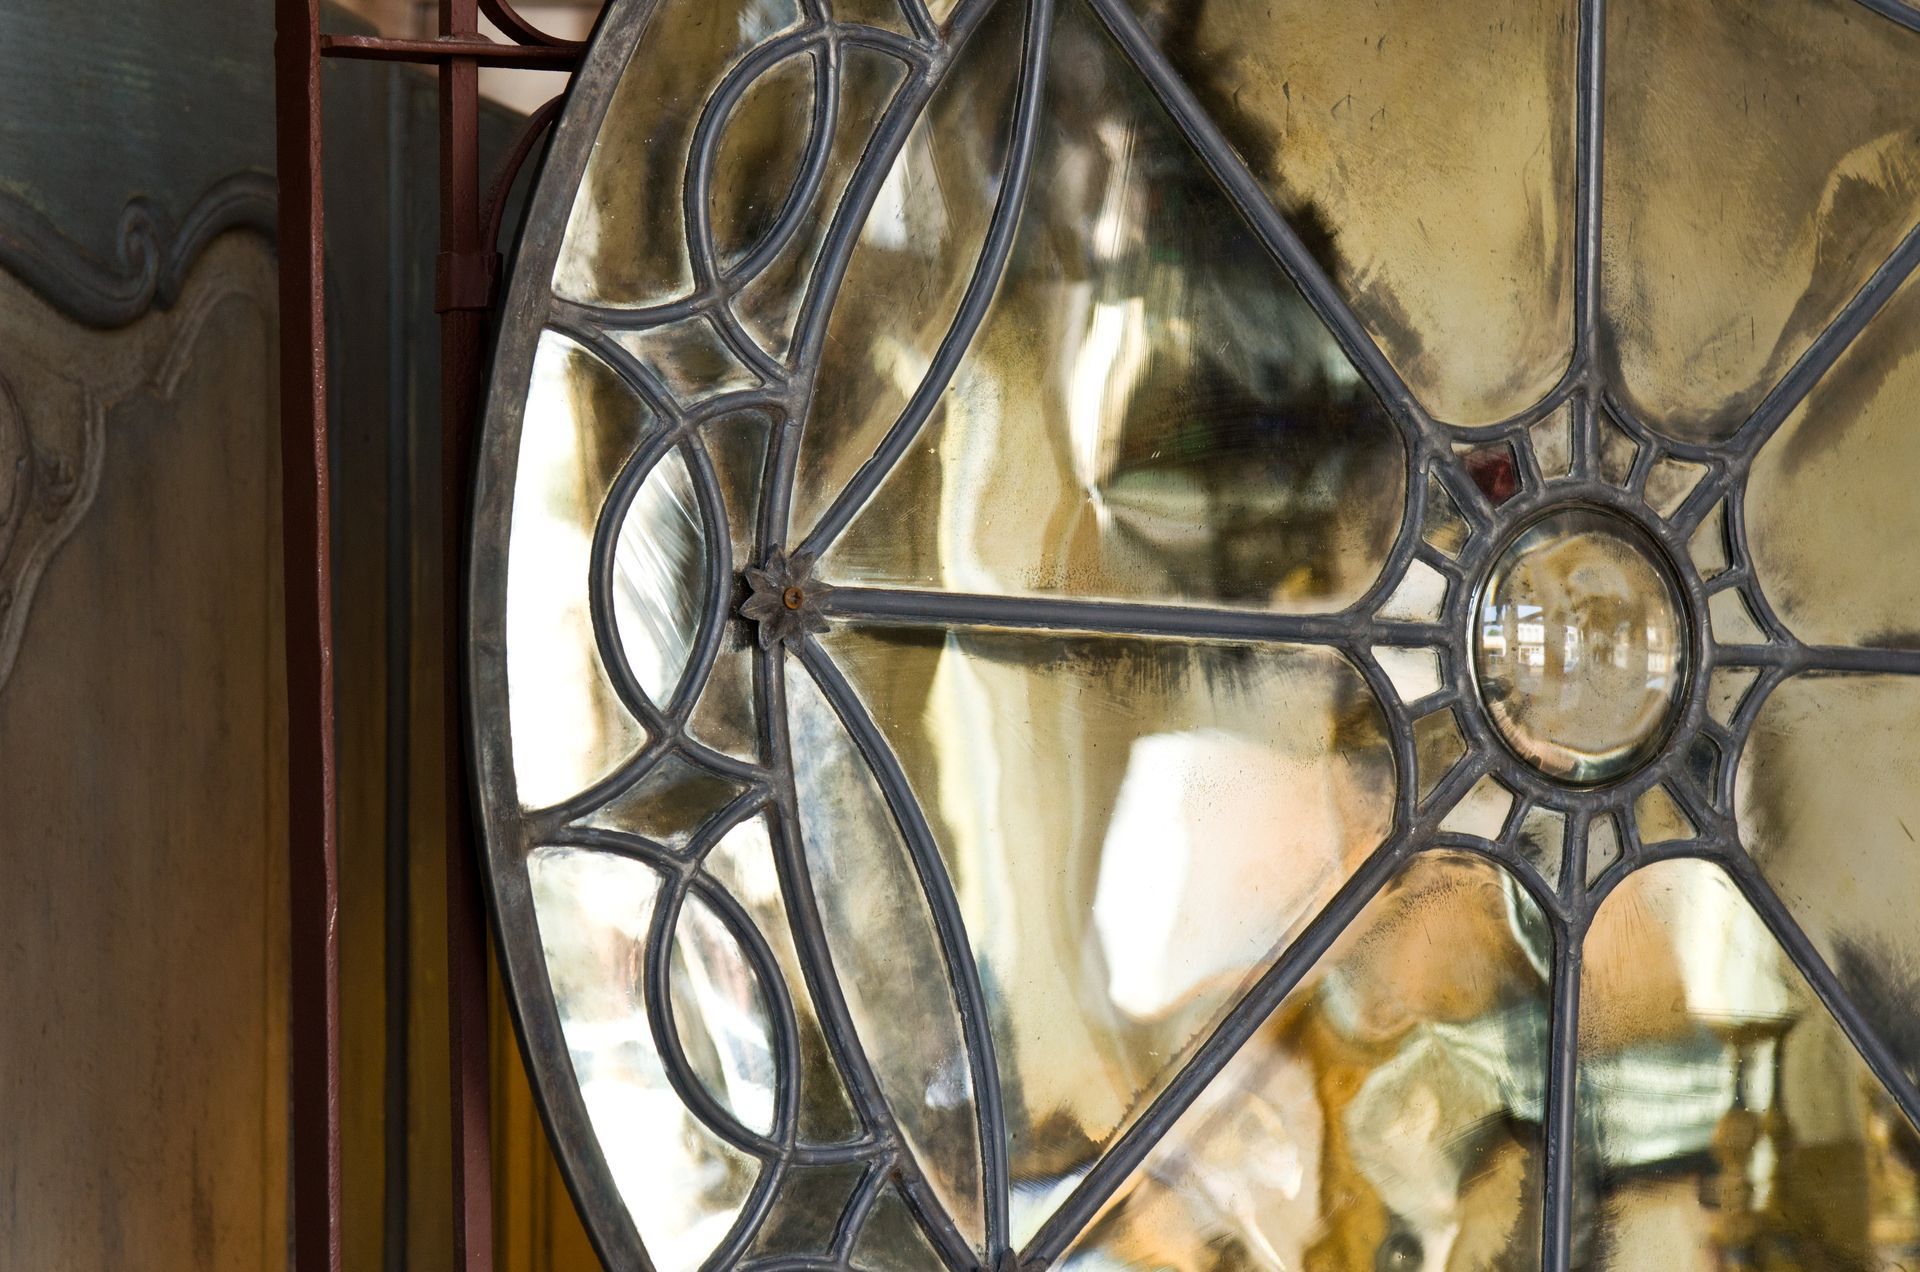 Closeup shot of a framed circular antique mirror